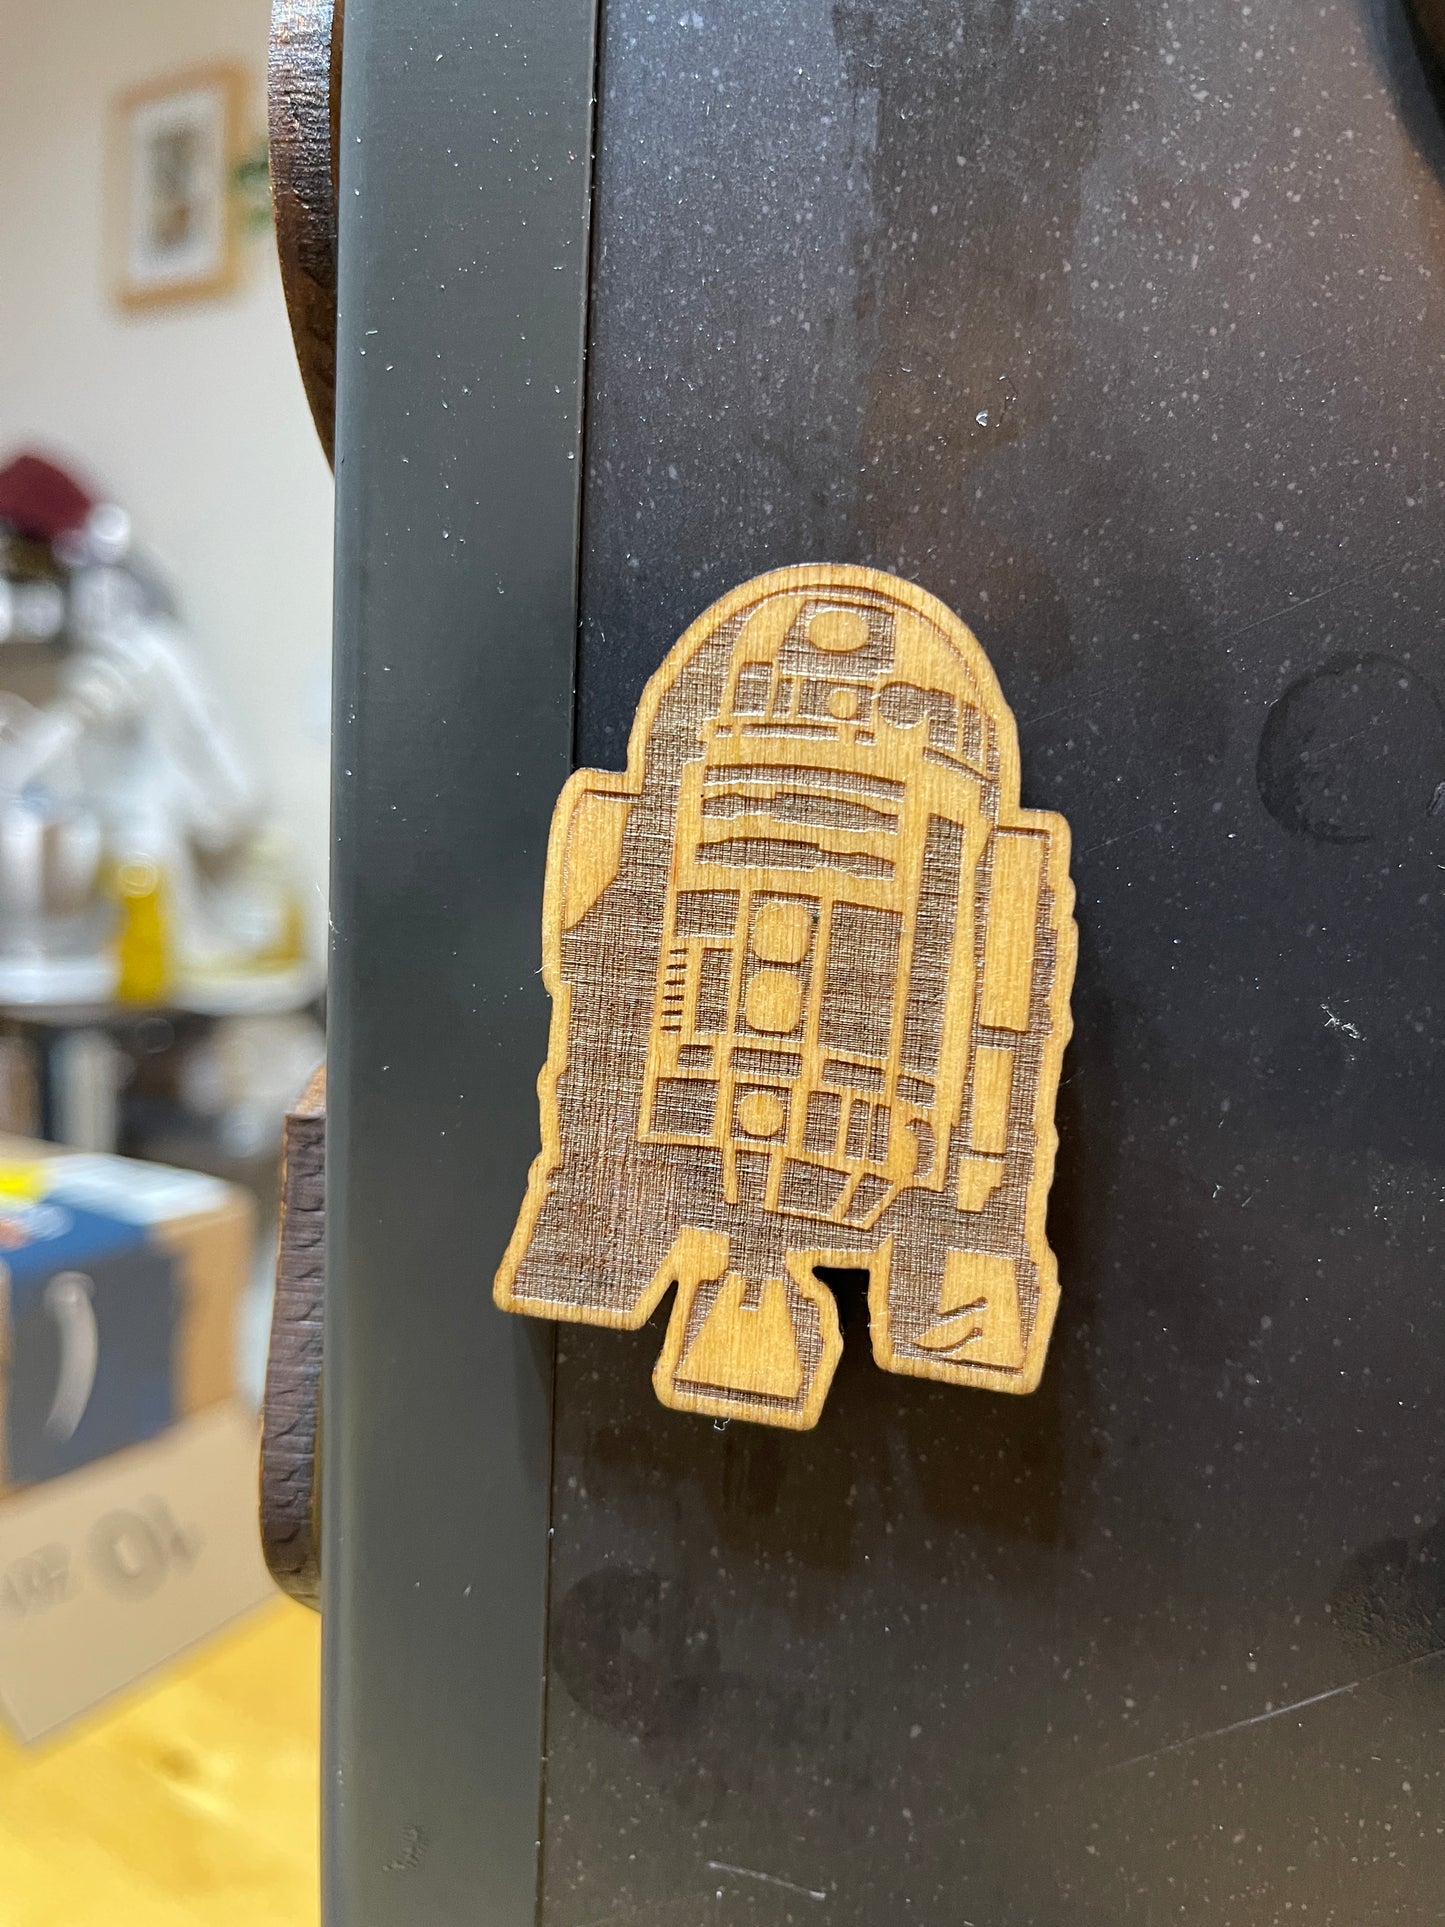 Star Wars fridge magnets